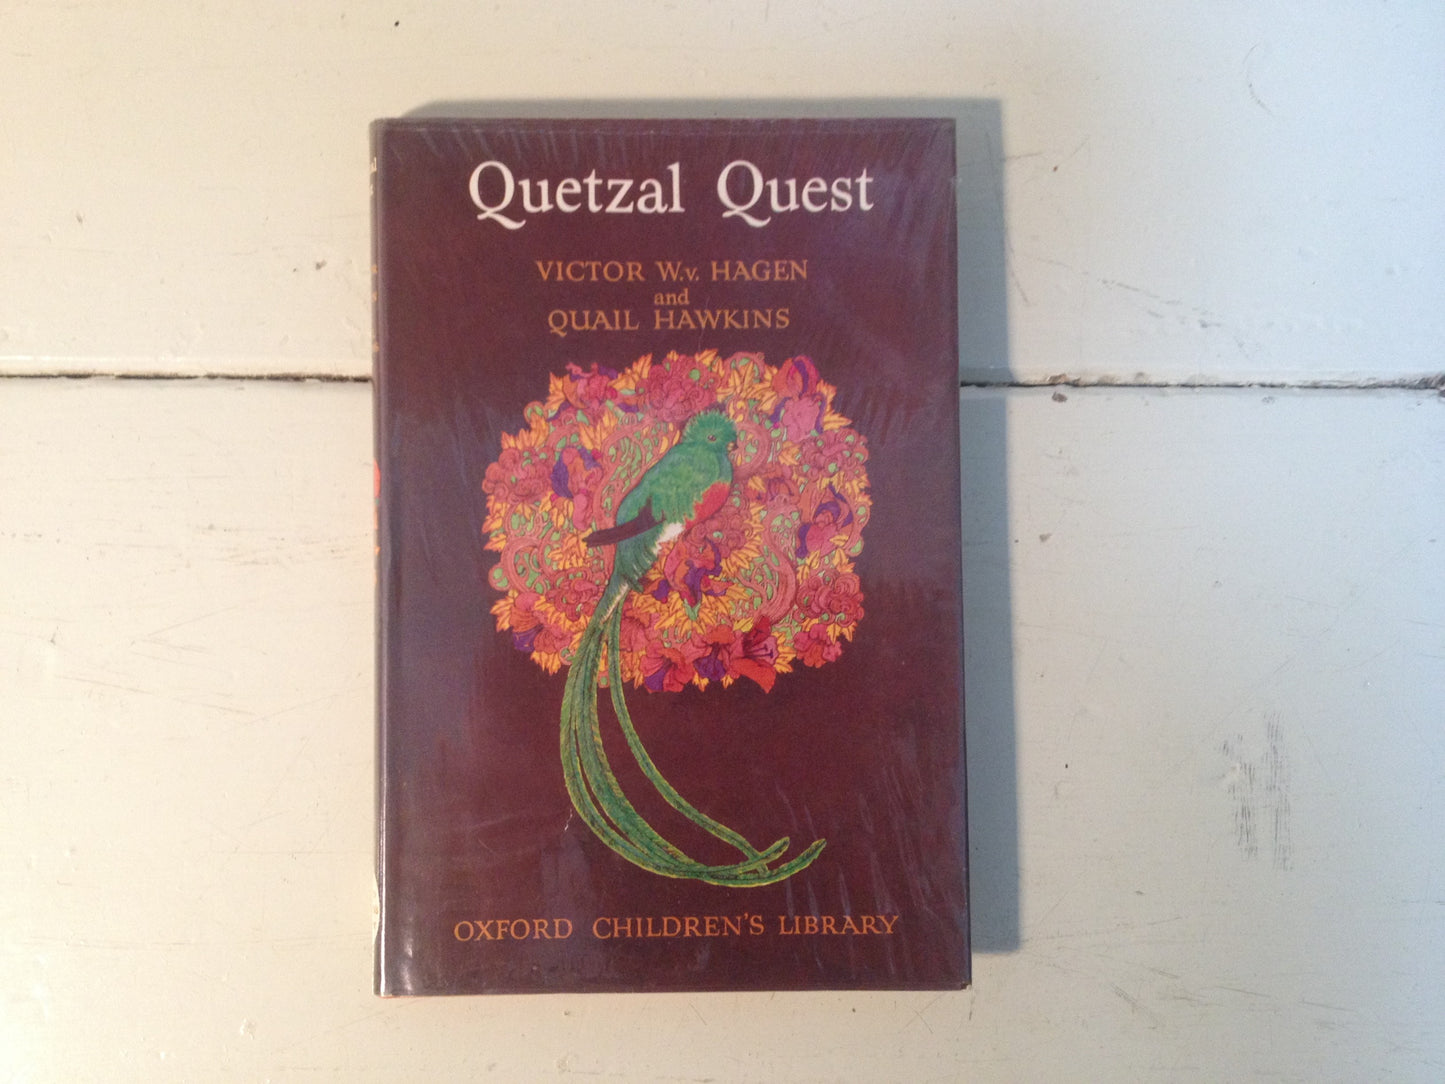 Quetzal Quest by Victor W.v. Hagen and Quail Hawkins